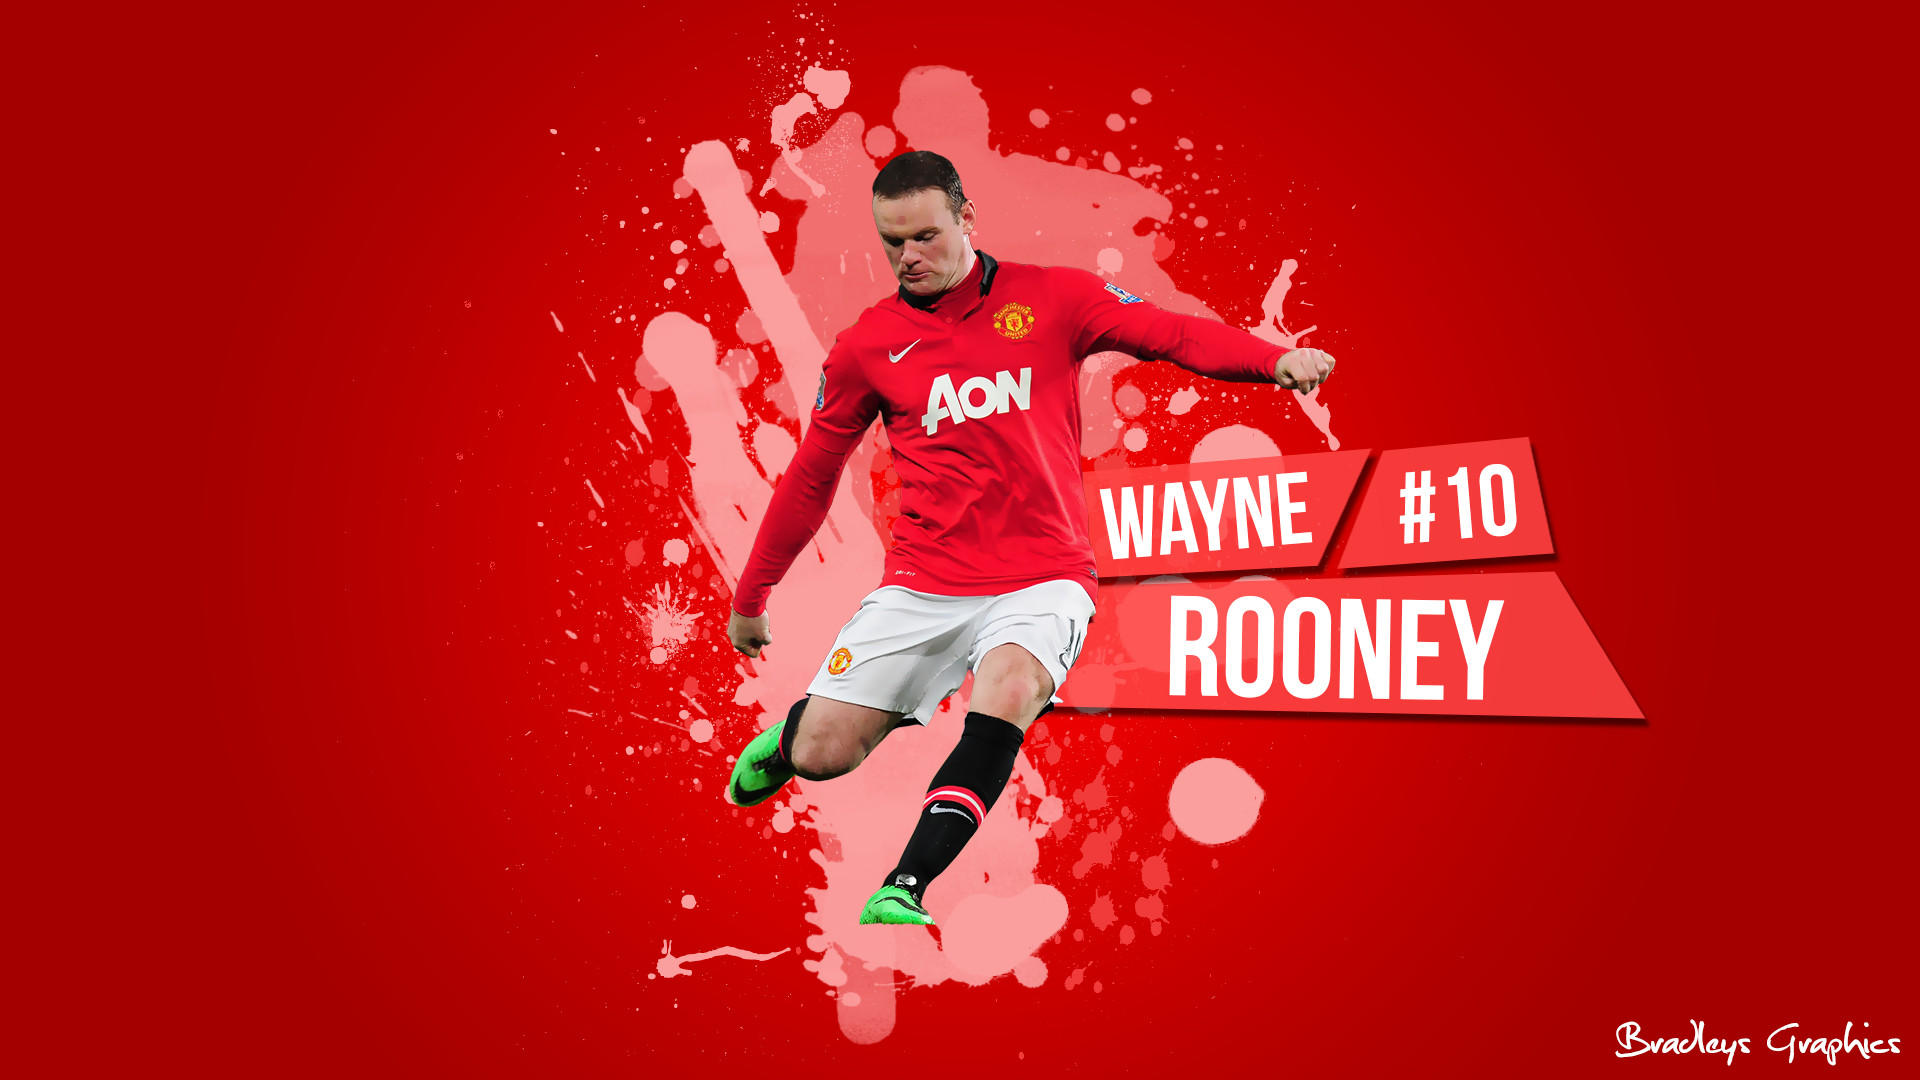 1920x1080 ... BradleysGraphics Wayne Rooney - Manchester United Wallpaper by  BradleysGraphics